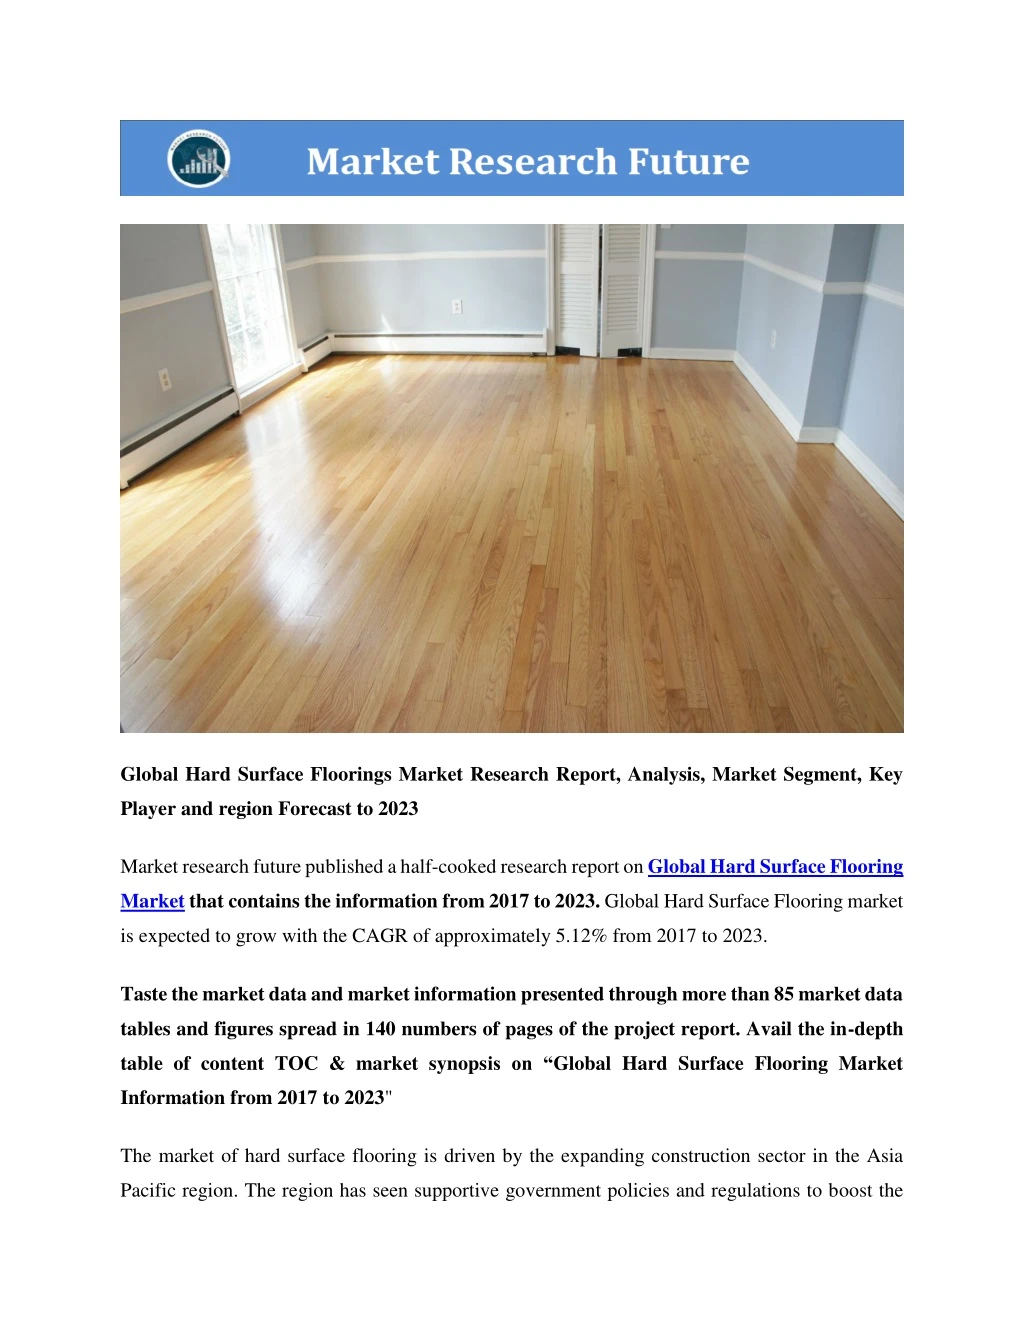 global hard surface floorings market research